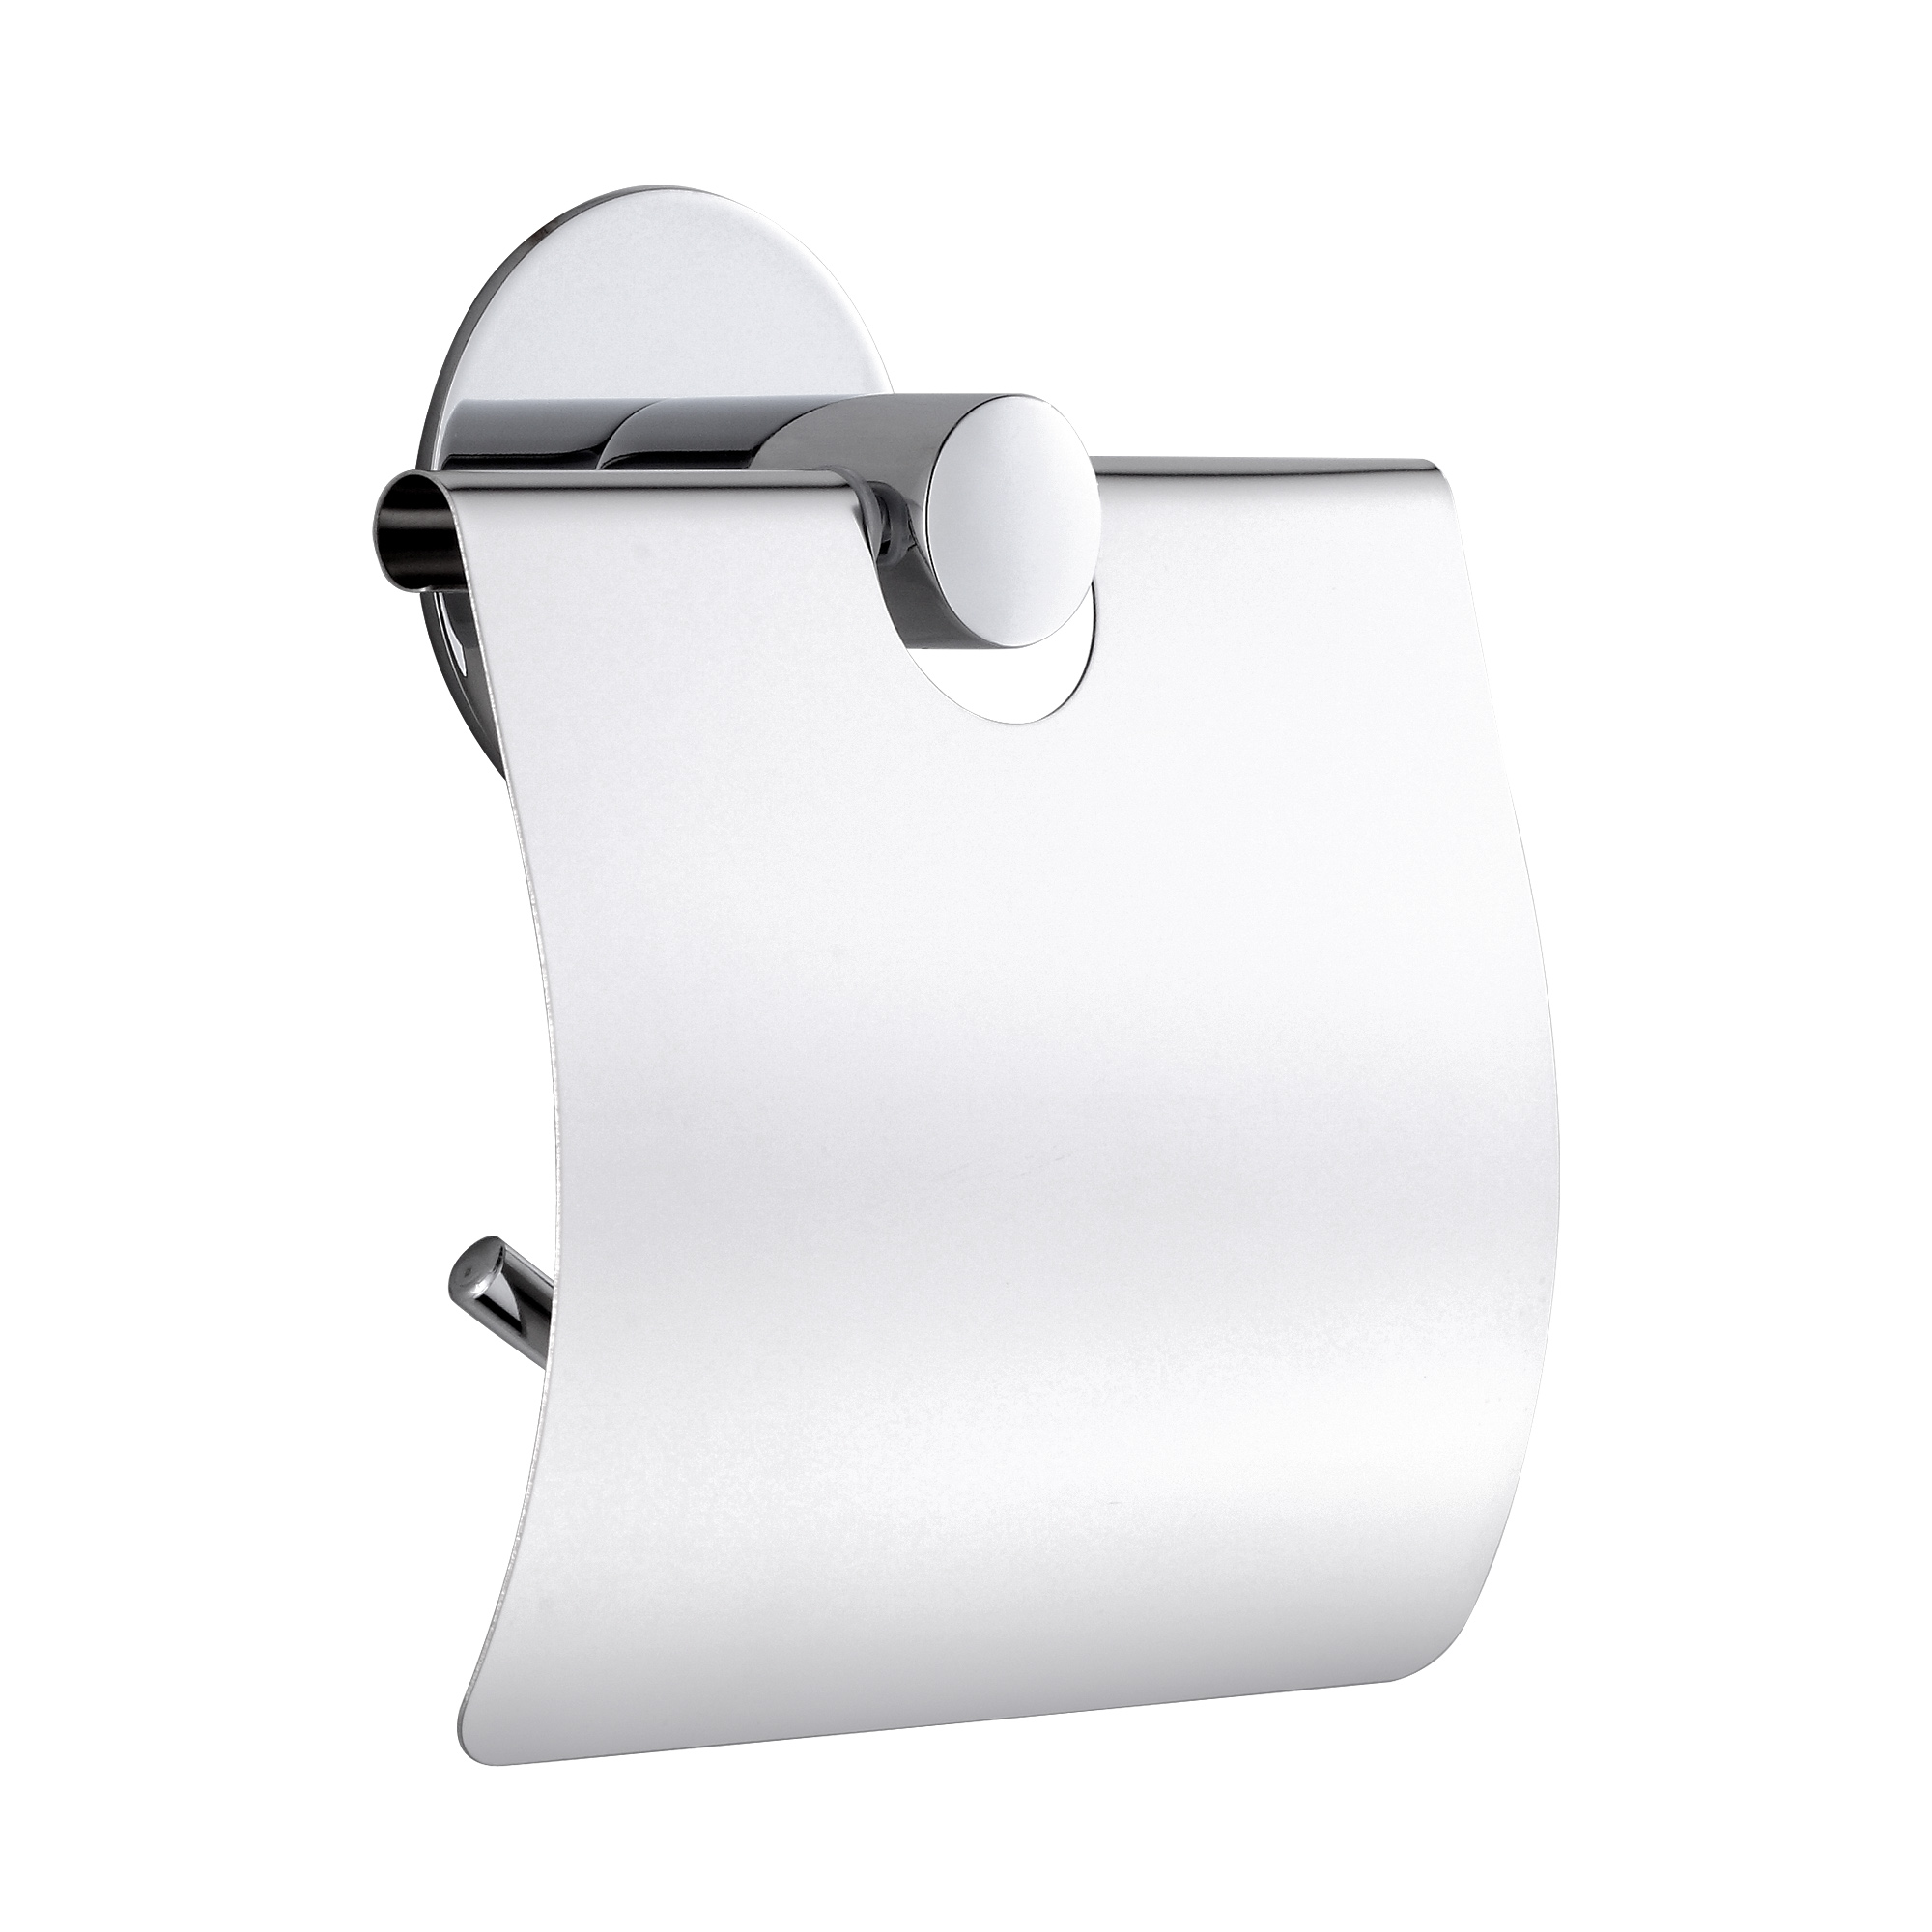 SWOYYU Chrome Toilet Roll Holder Toilet 